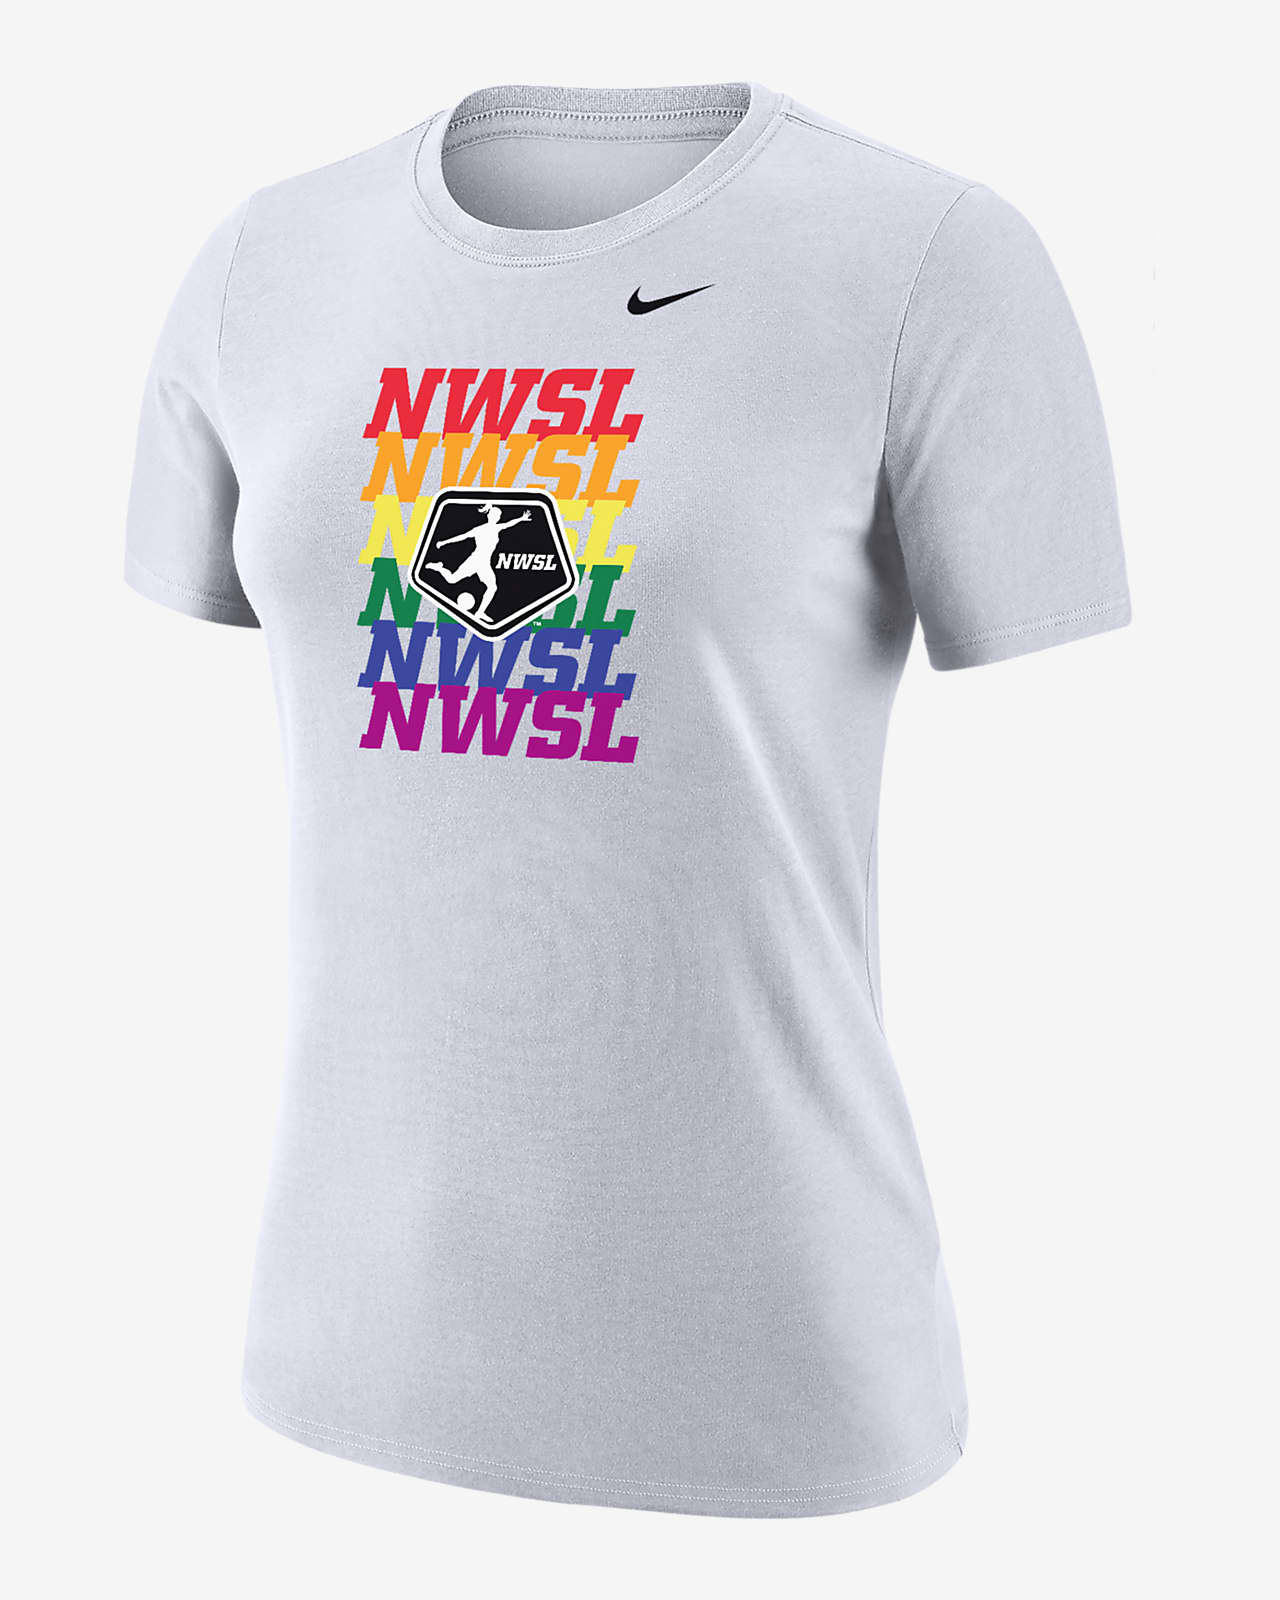 NWSL Women's Nike Soccer T-Shirt